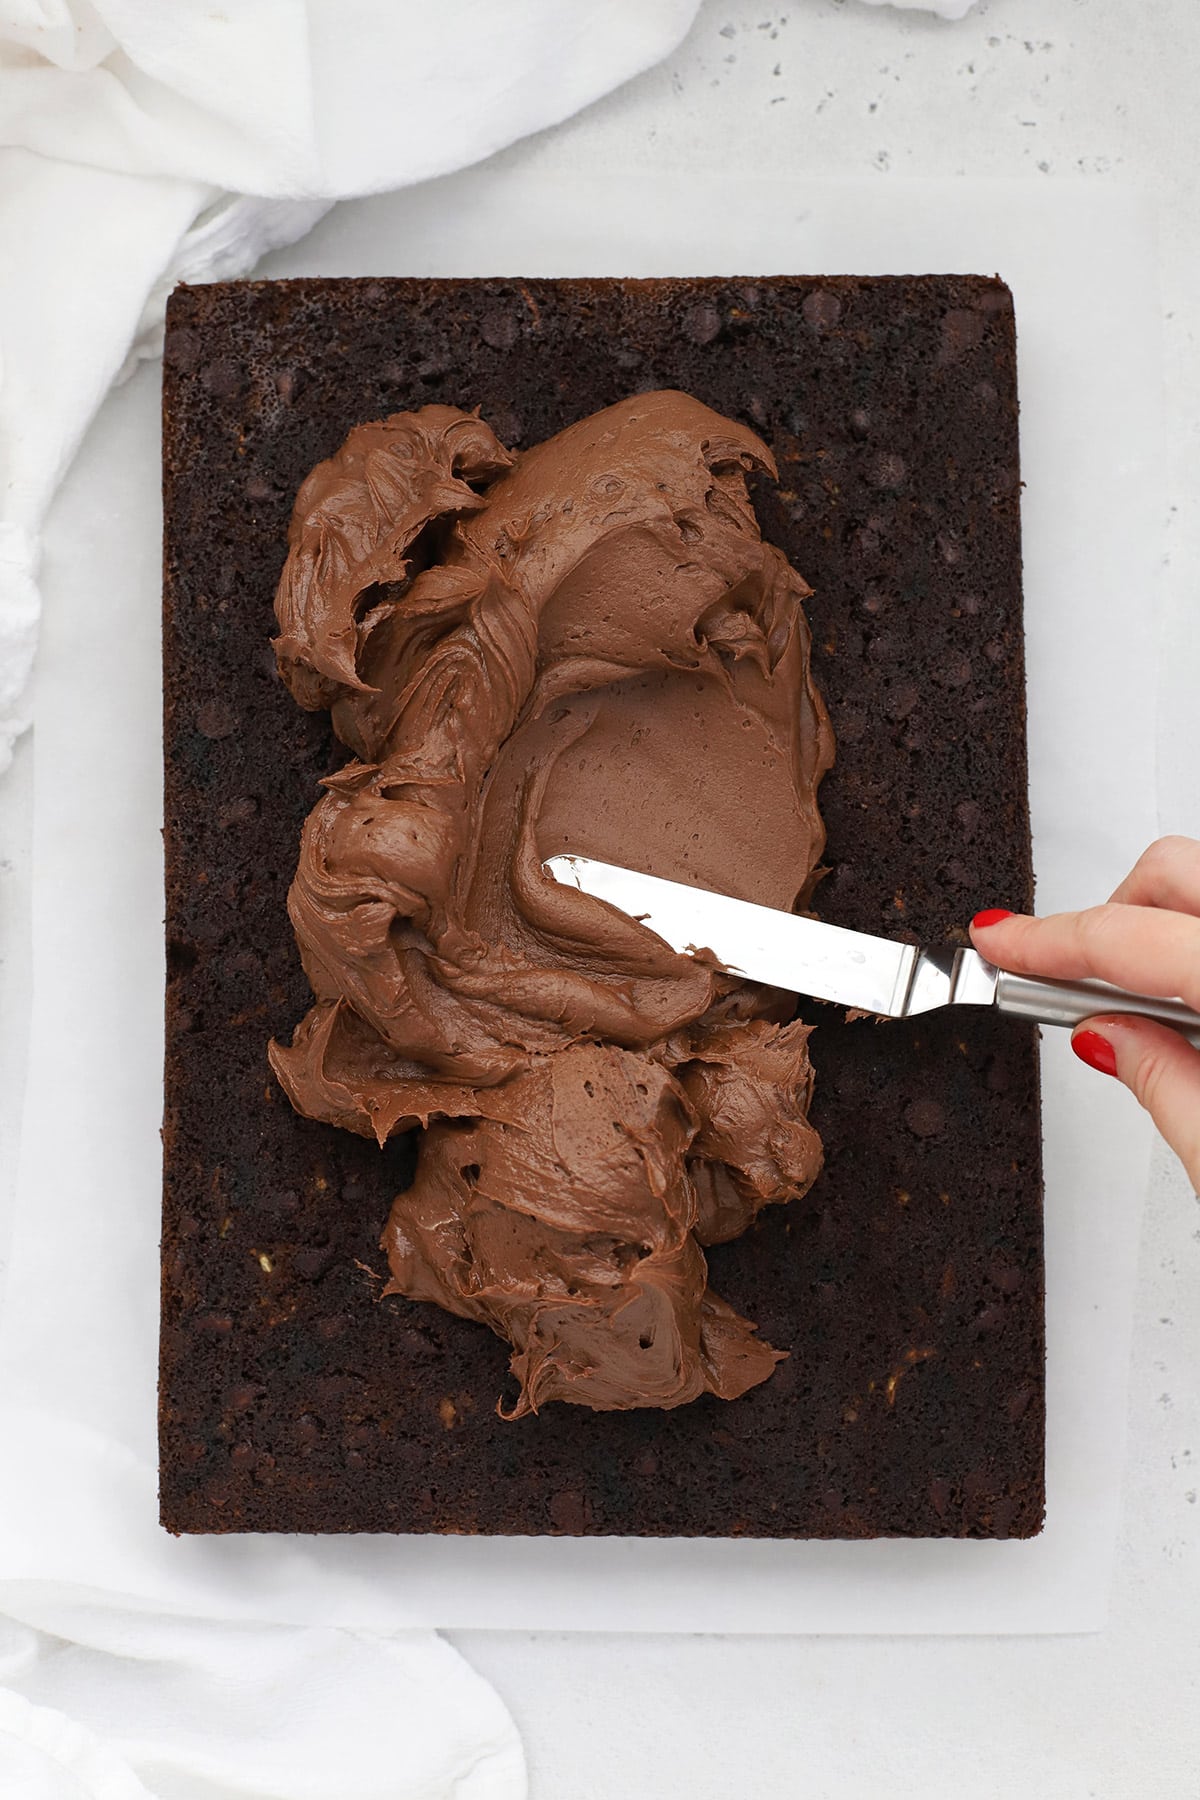 spreading chocolate buttercream frosting onto gluten-free chocolate zucchini cake